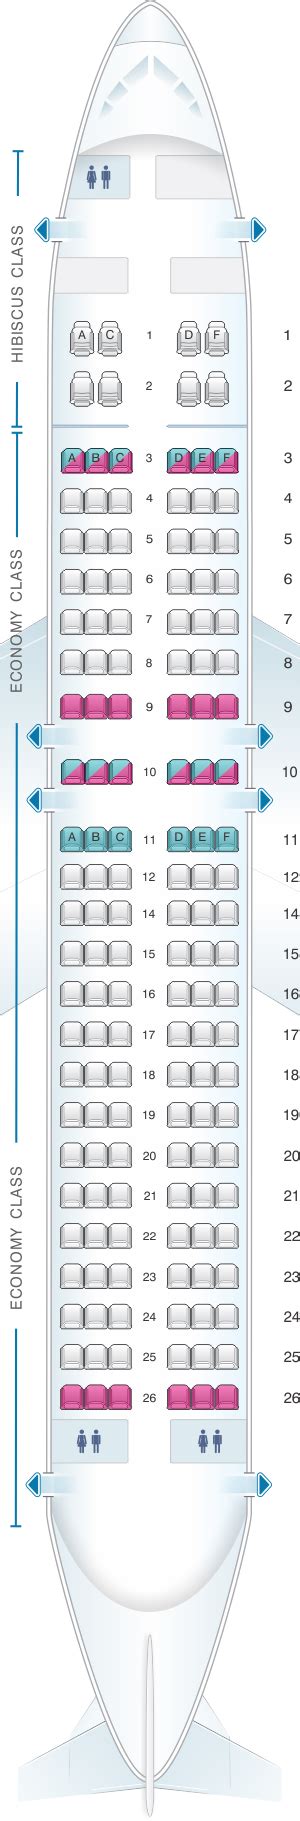 Plan De Cabine Aircalin Airbus A320 Seatmaestrofr